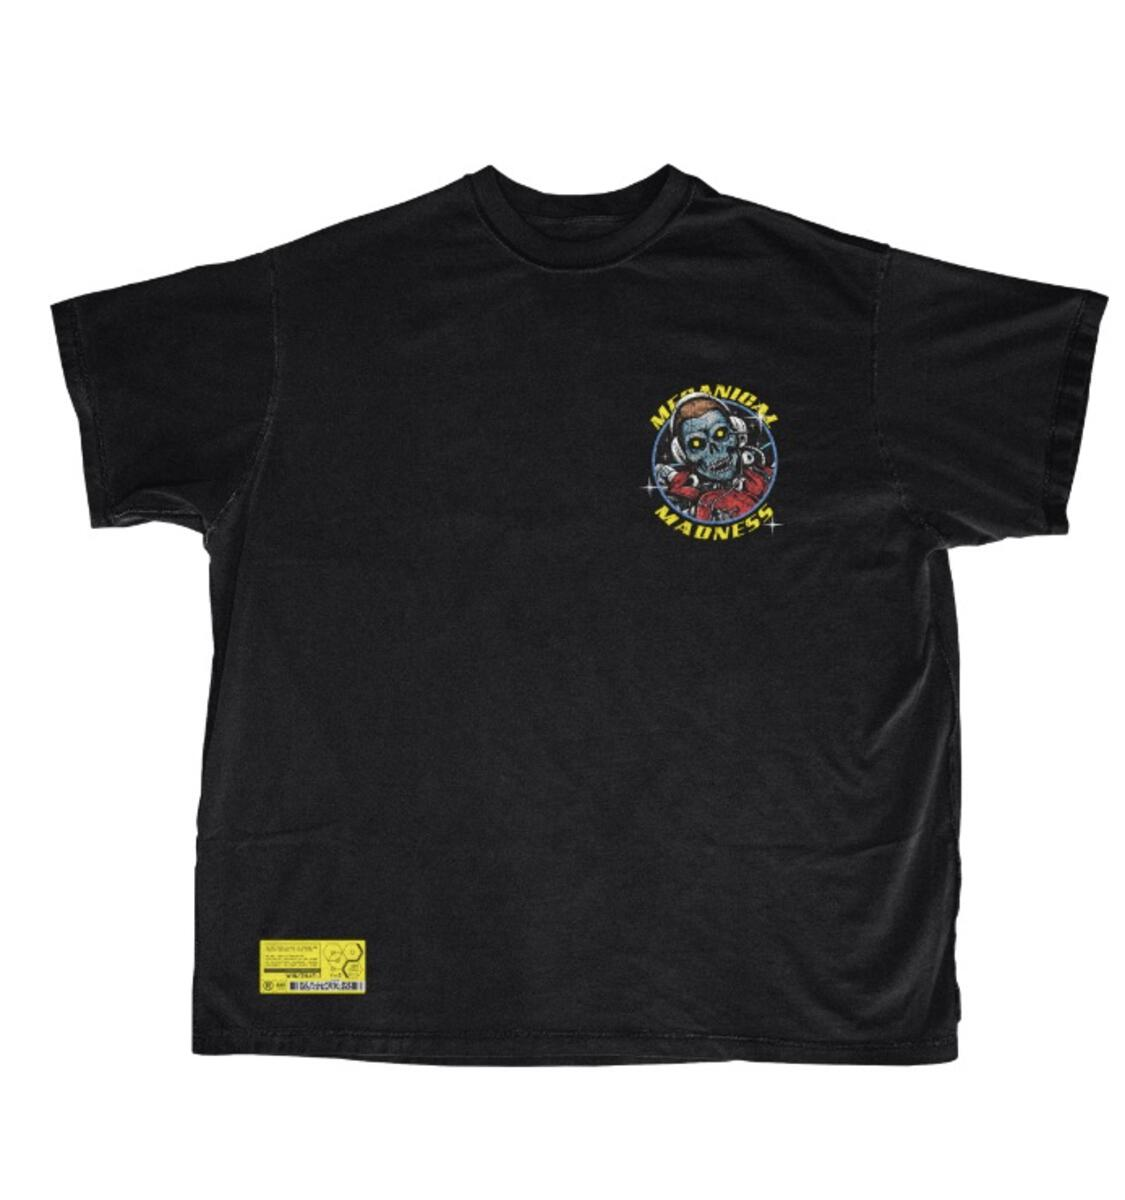 Rad Boyz Artificial T-Shirt Black